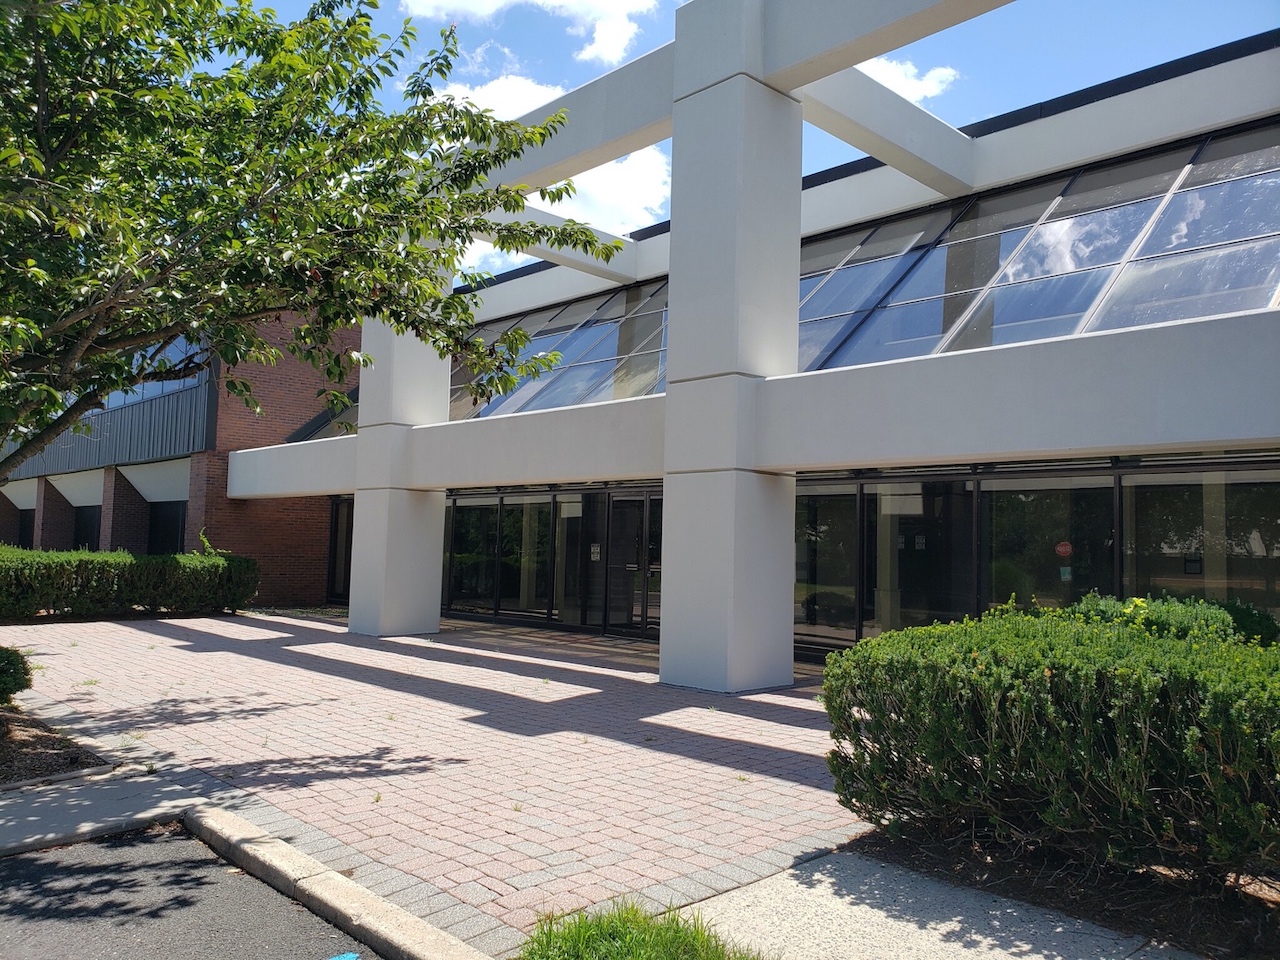 Riverview Technology Center at 1 Riverview Drive – Somerset, NJ​